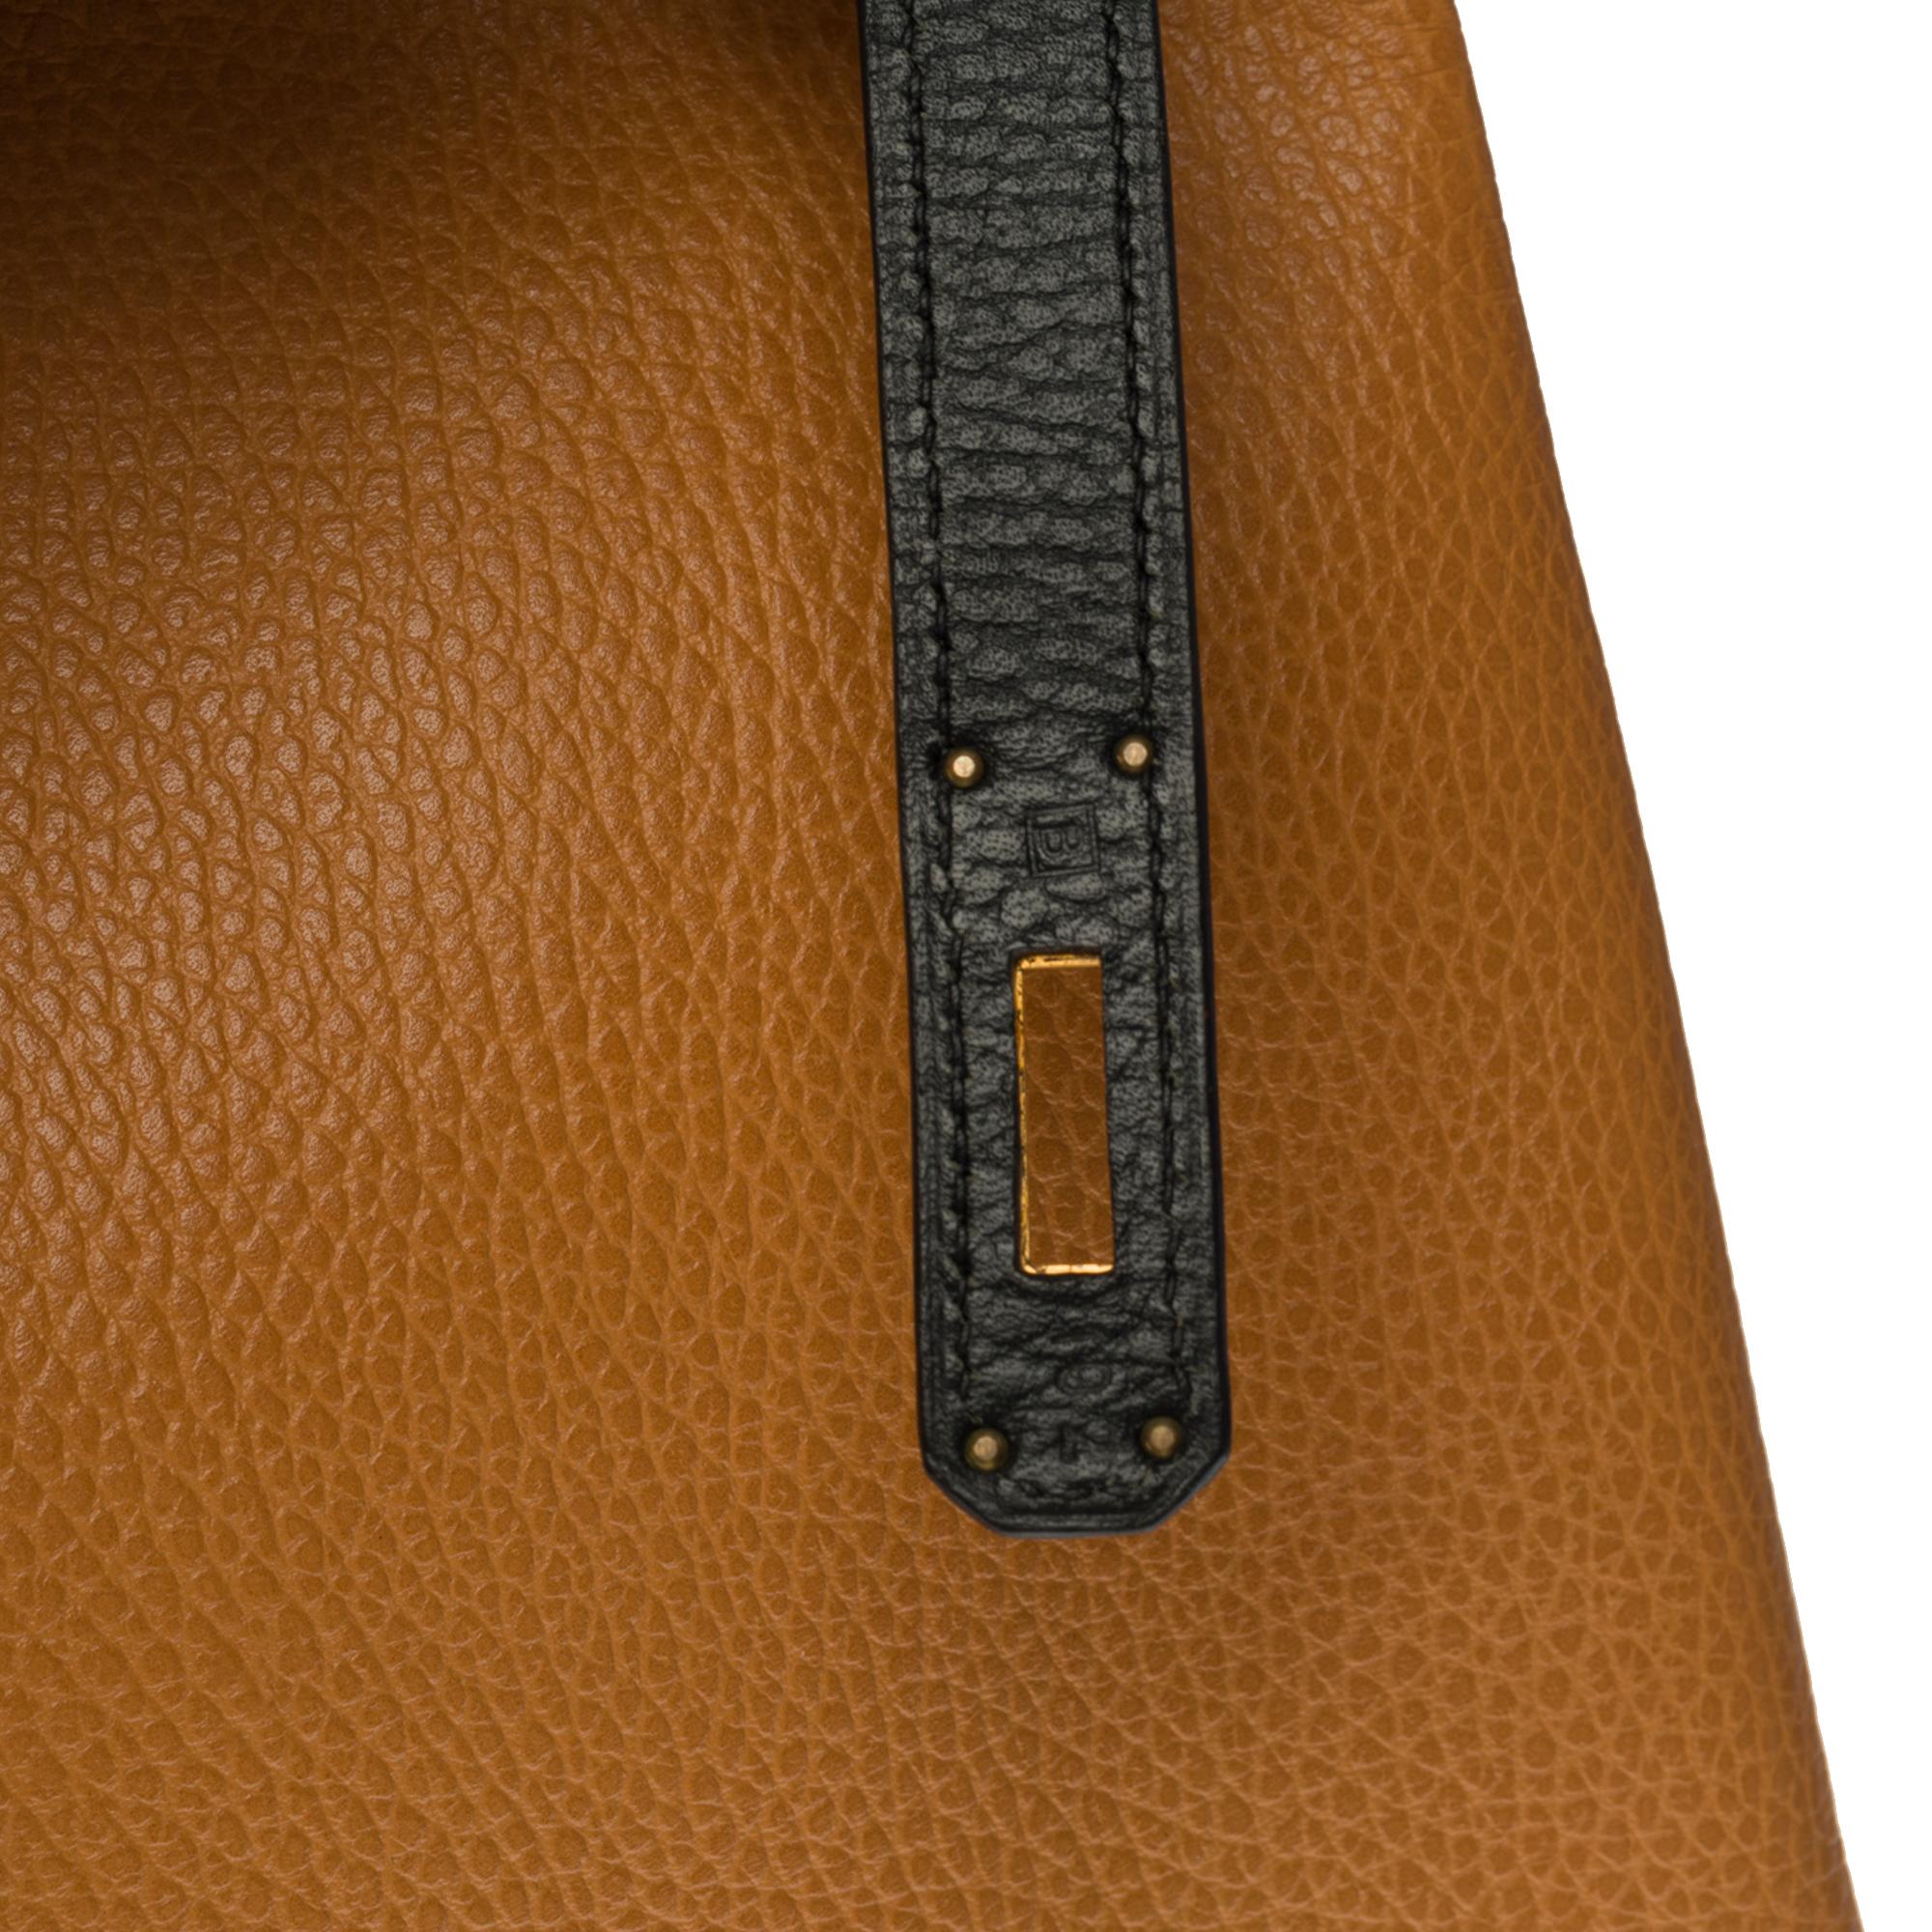 Women's or Men's Rare Hermes Birkin 40cm handbag in Gold & black Vache Ardenne leather, GHW